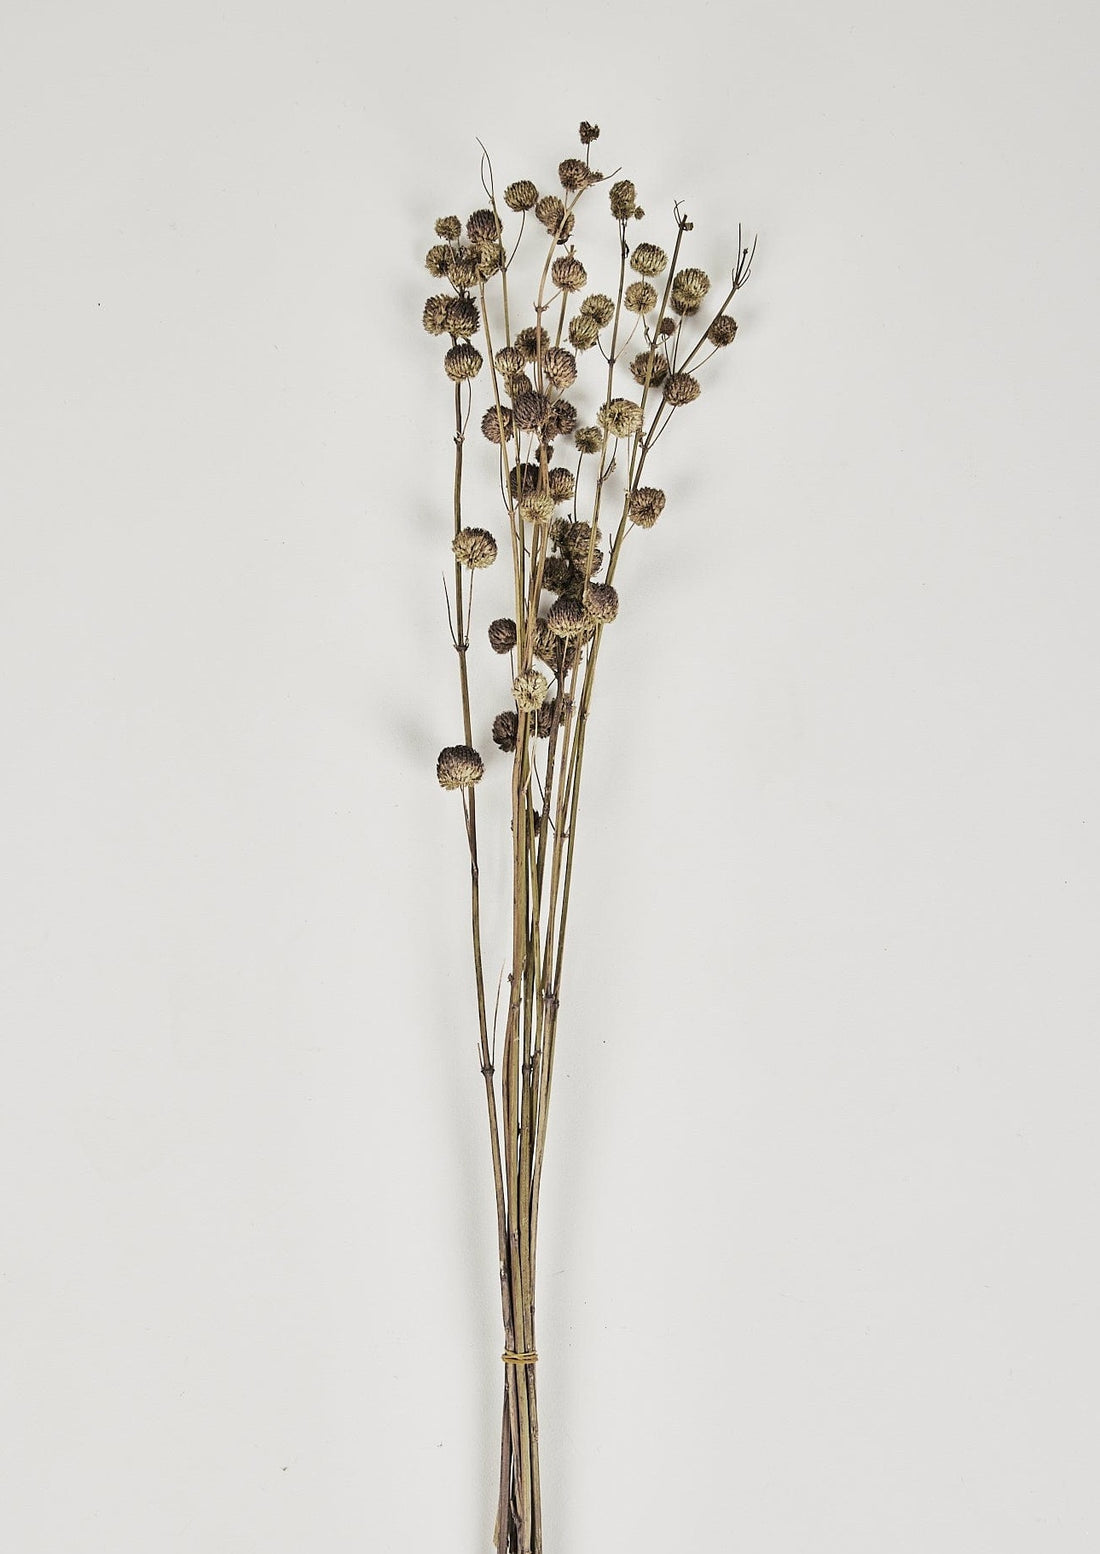 Natural Touch Artificial Delphinium Flower in Cobalt Blue - 47